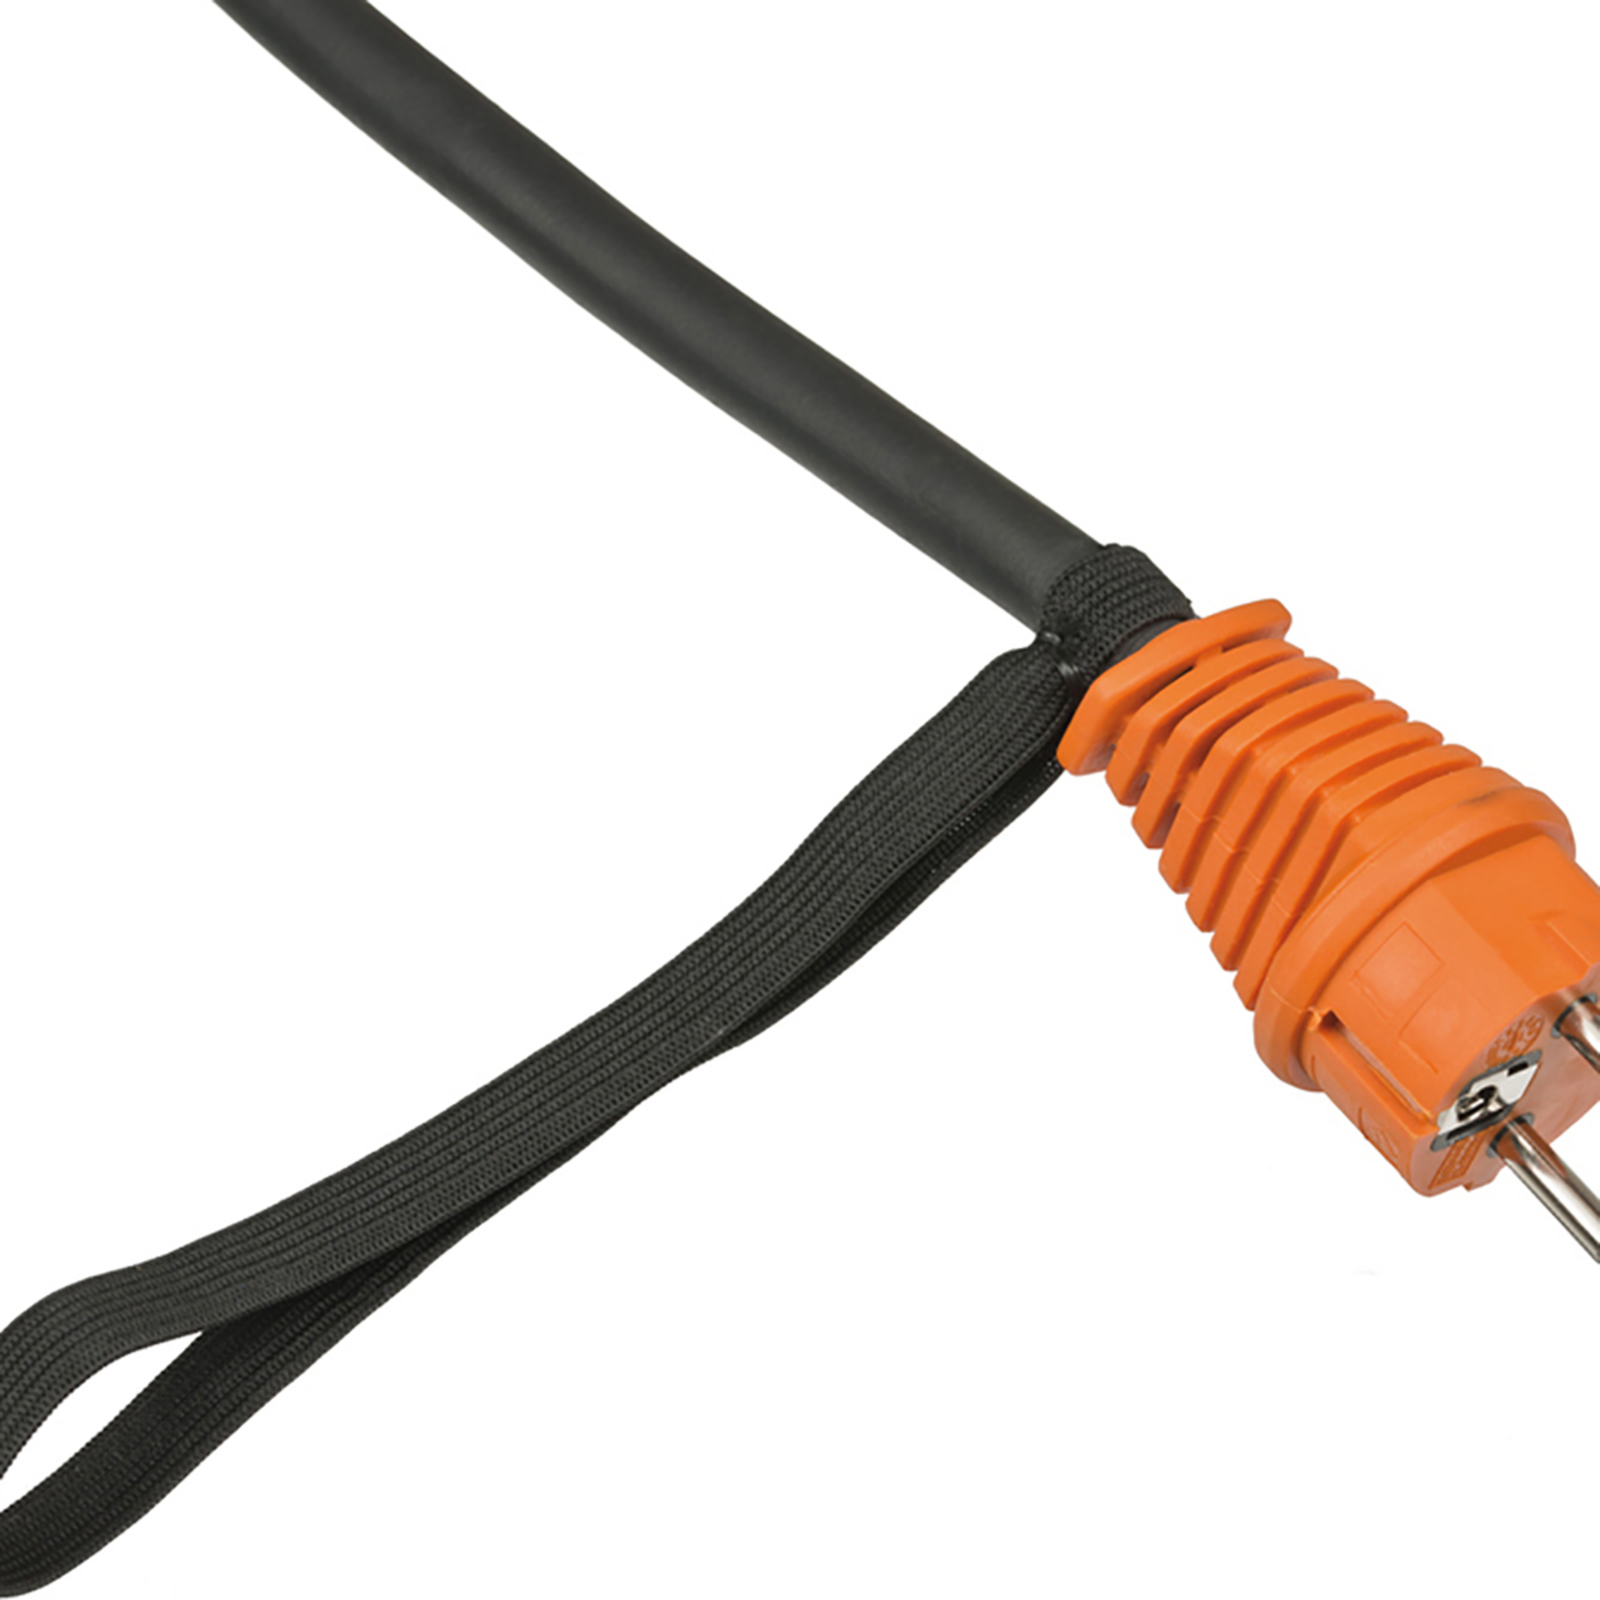 Stickkontaktlampa BA kabel H07BQ-F 3G 2,5 längd 5m